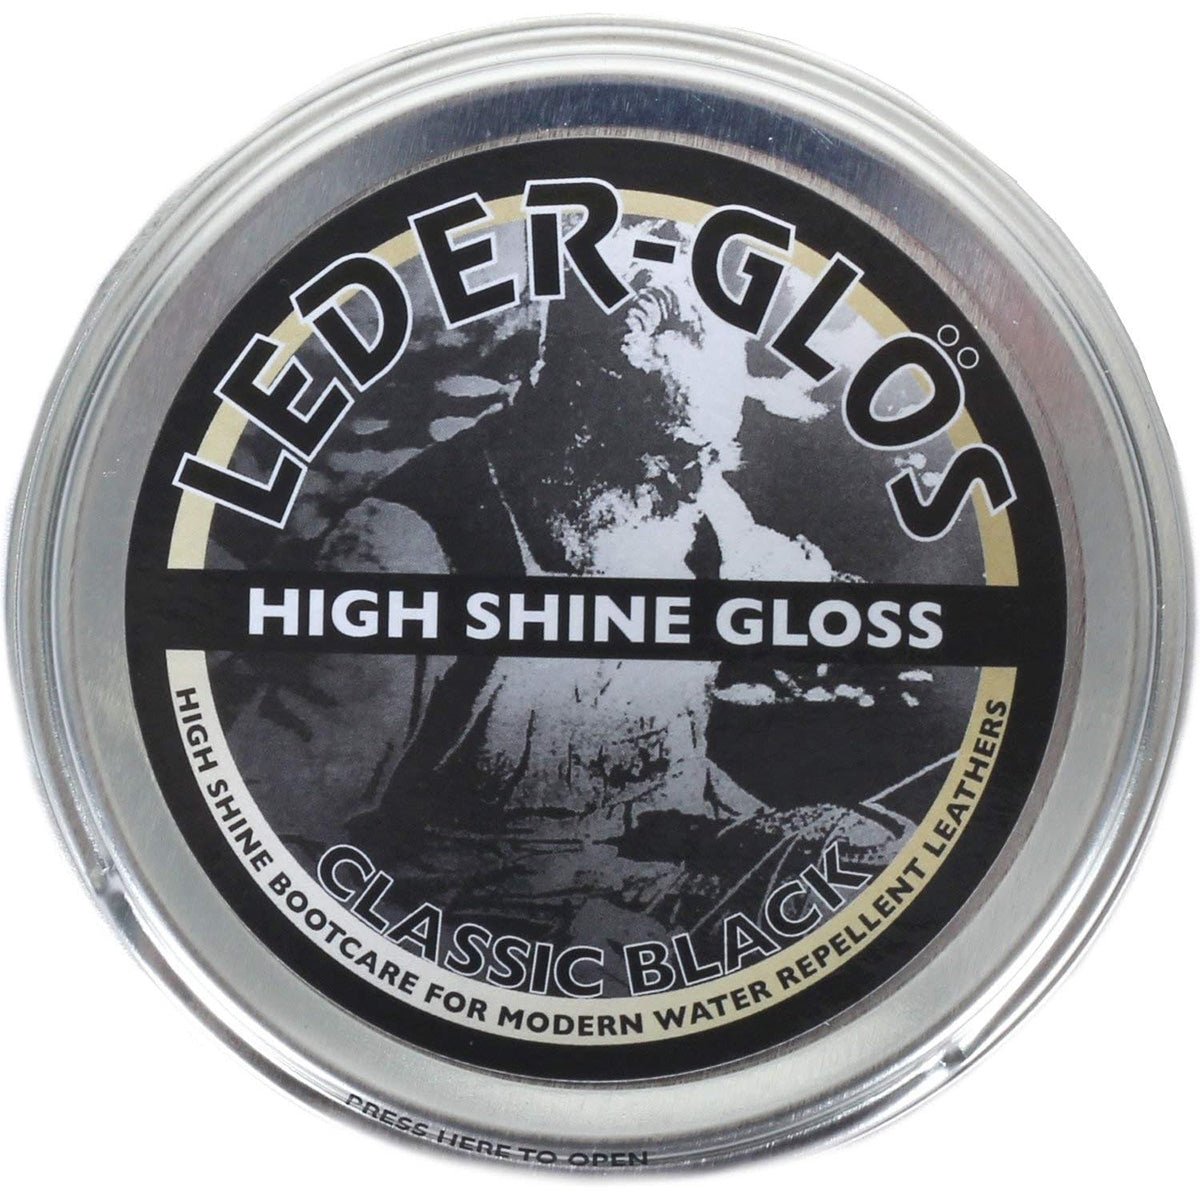 Altberg Leder-Glos 80g High Gloss Shoe Polish - John Bull Clothing